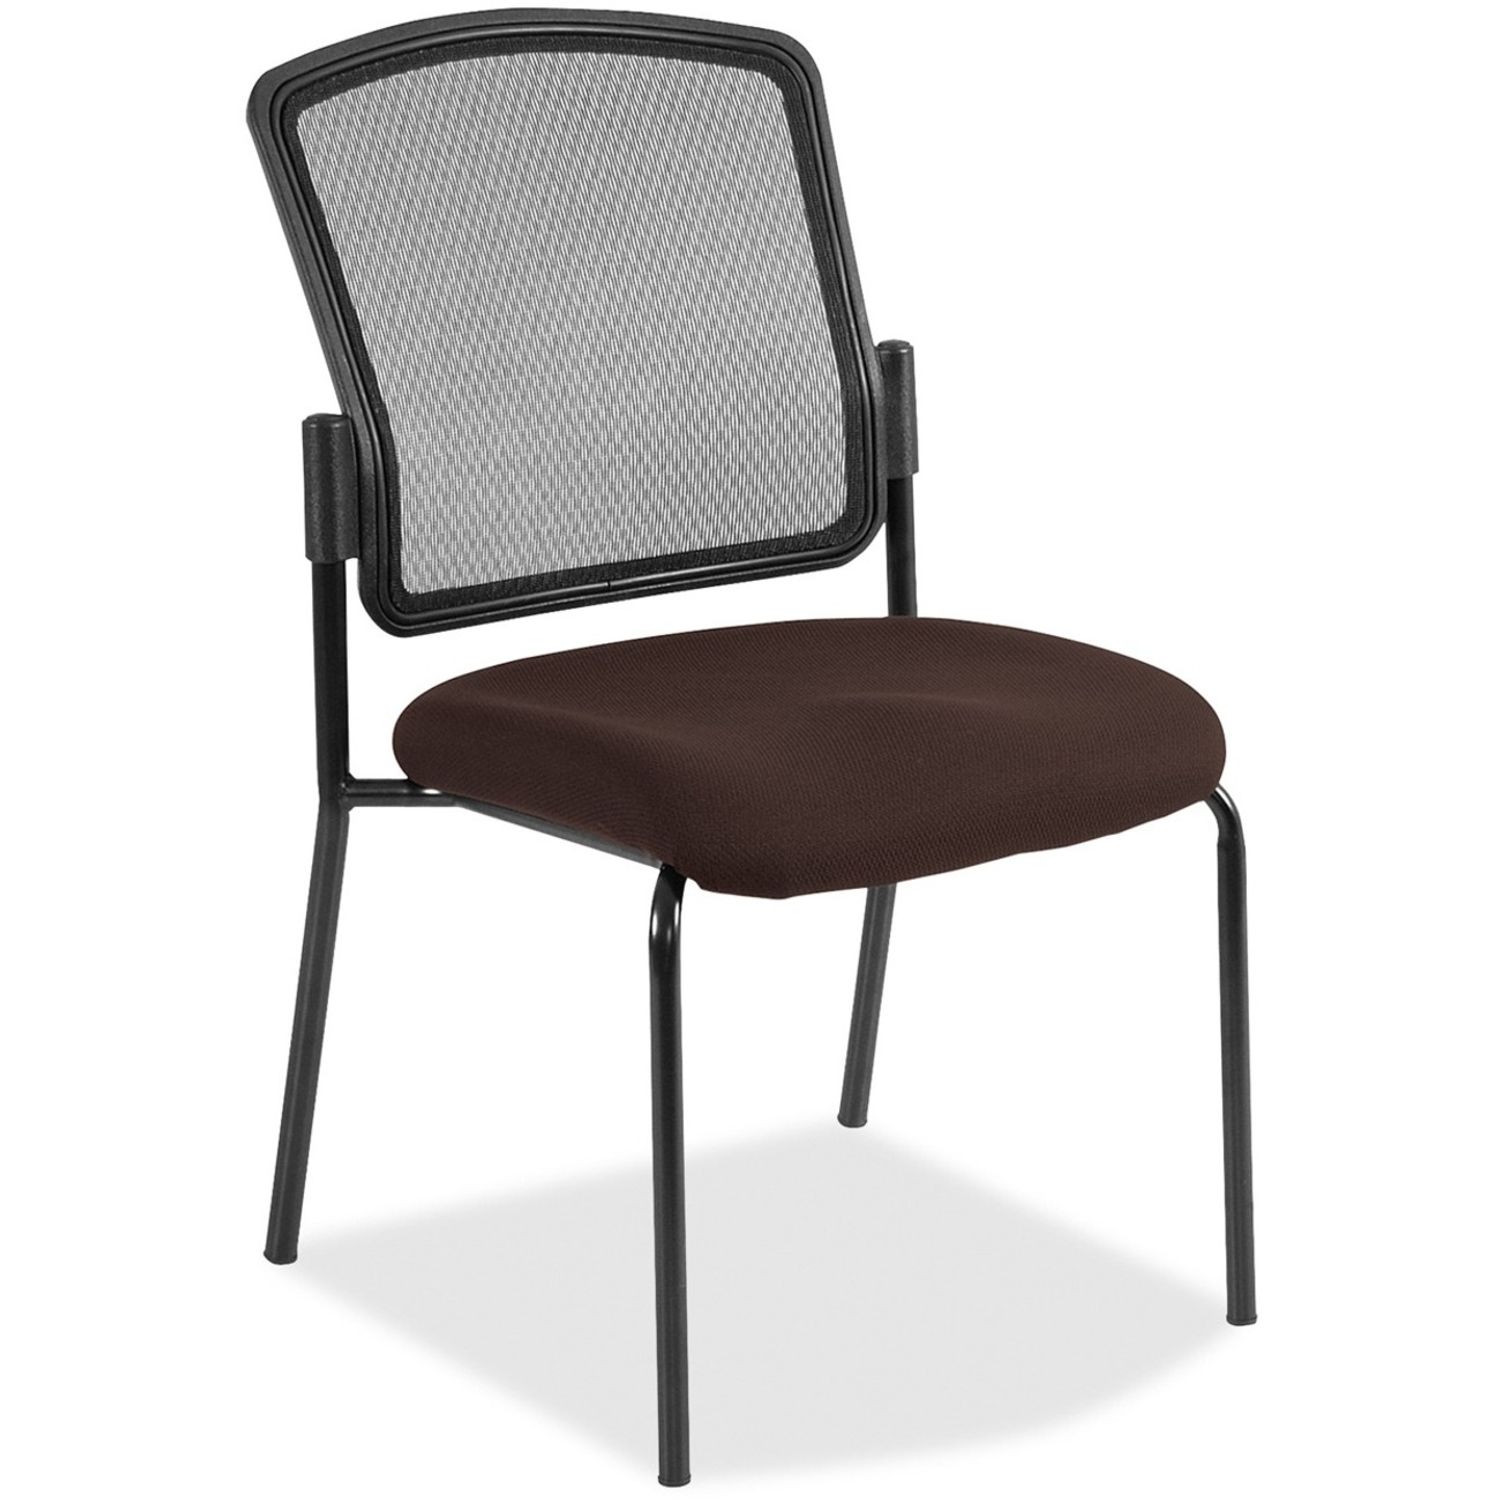 Dakota 2 7014 Guest Chair Chocolate Fabric Seat, Steel Frame, Four-legged Base, 1 Each